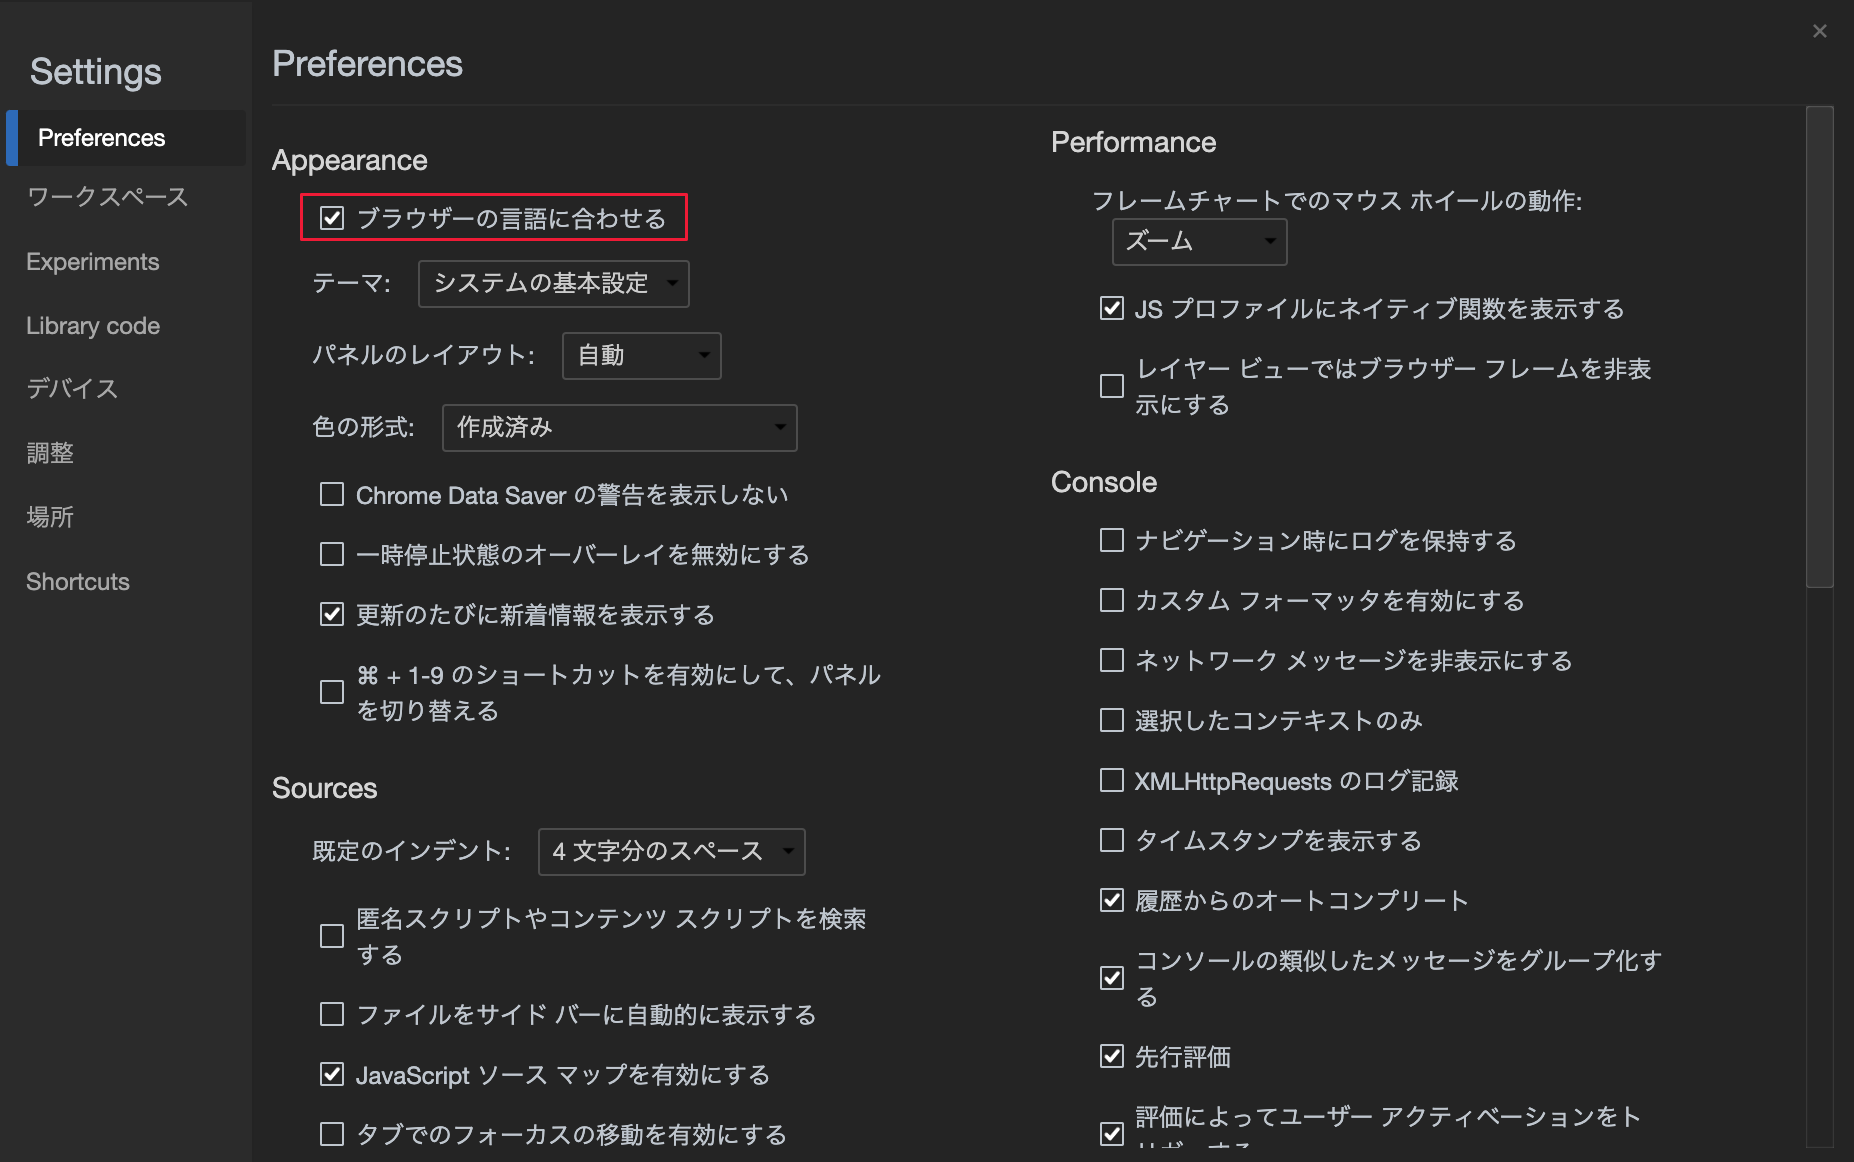 Match browser language DevTools setting in Japanese